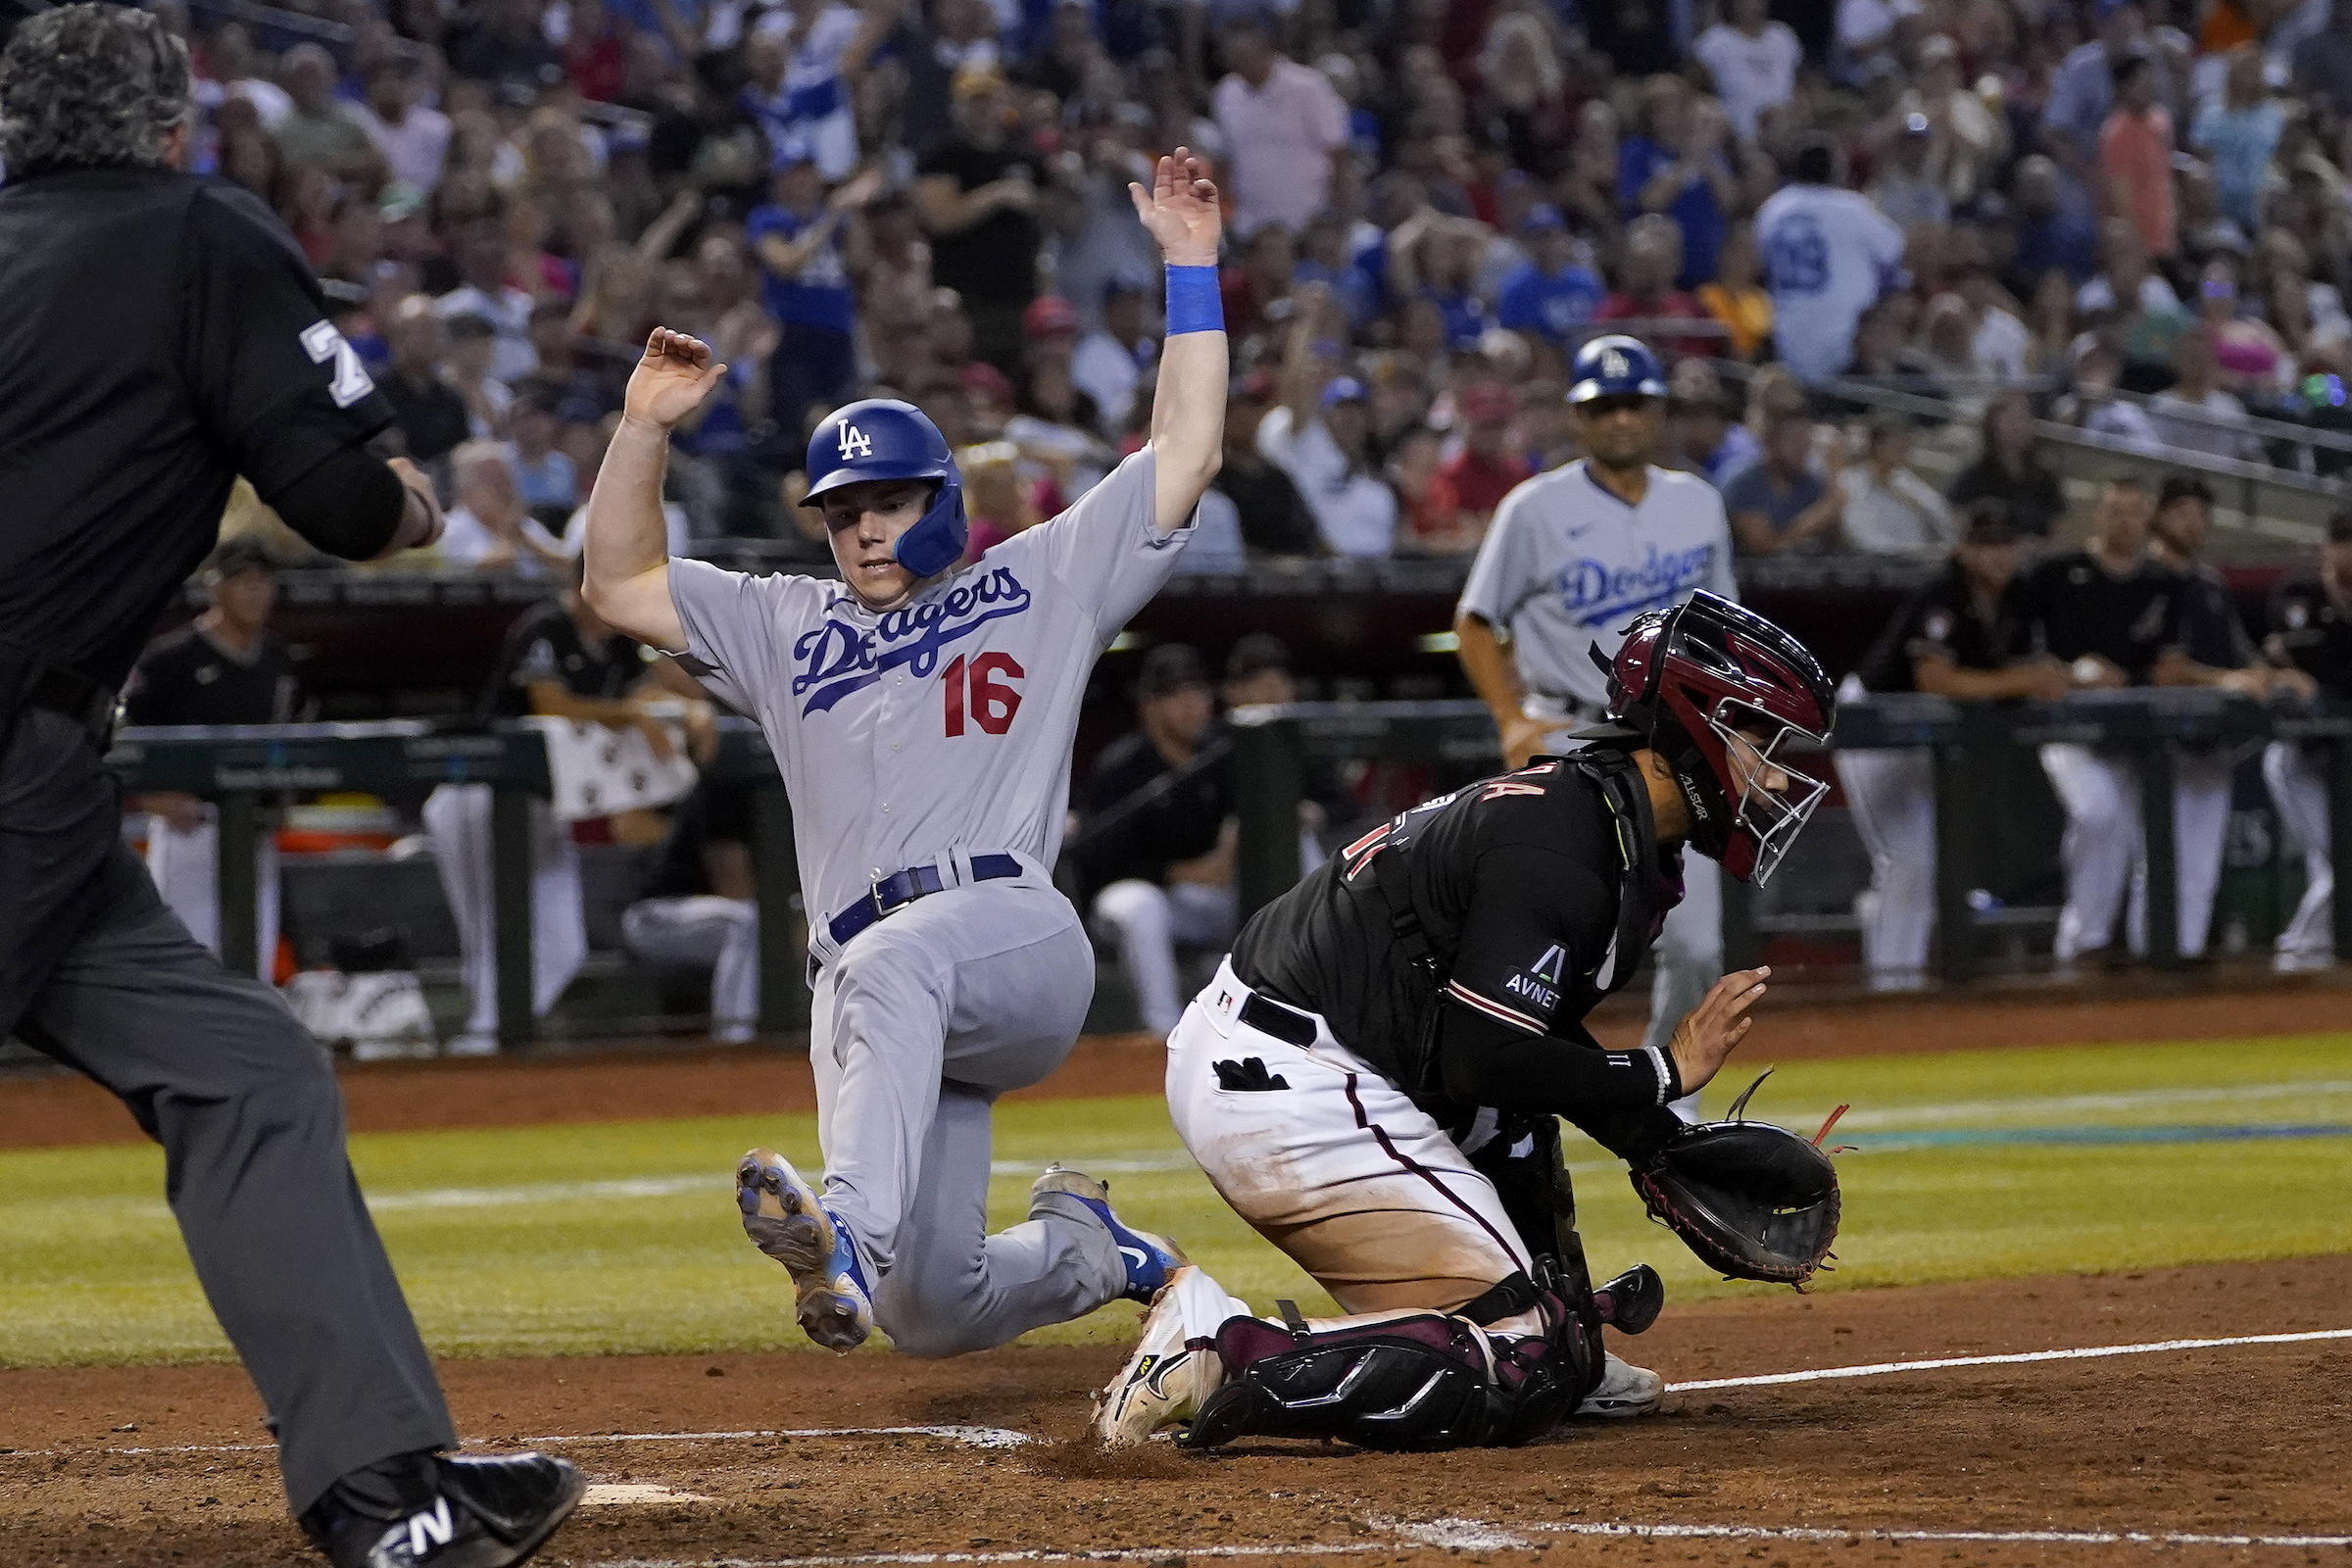 Dodgers News: Watch Jason Heyward Snap His Bat in Half After